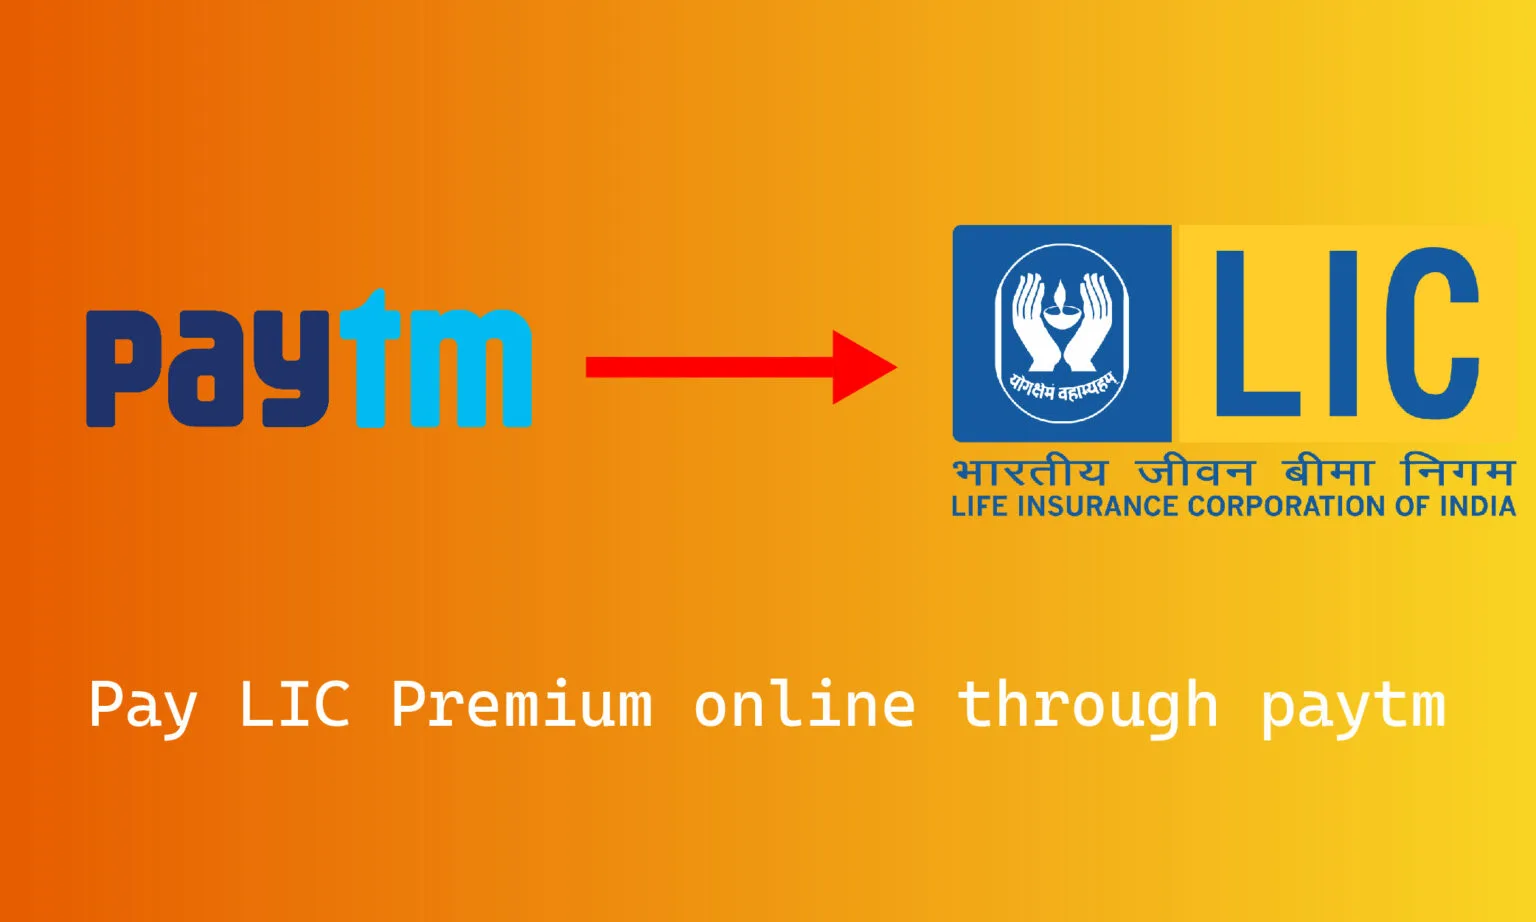 How to Pay LIC Premium Online Through Paytm